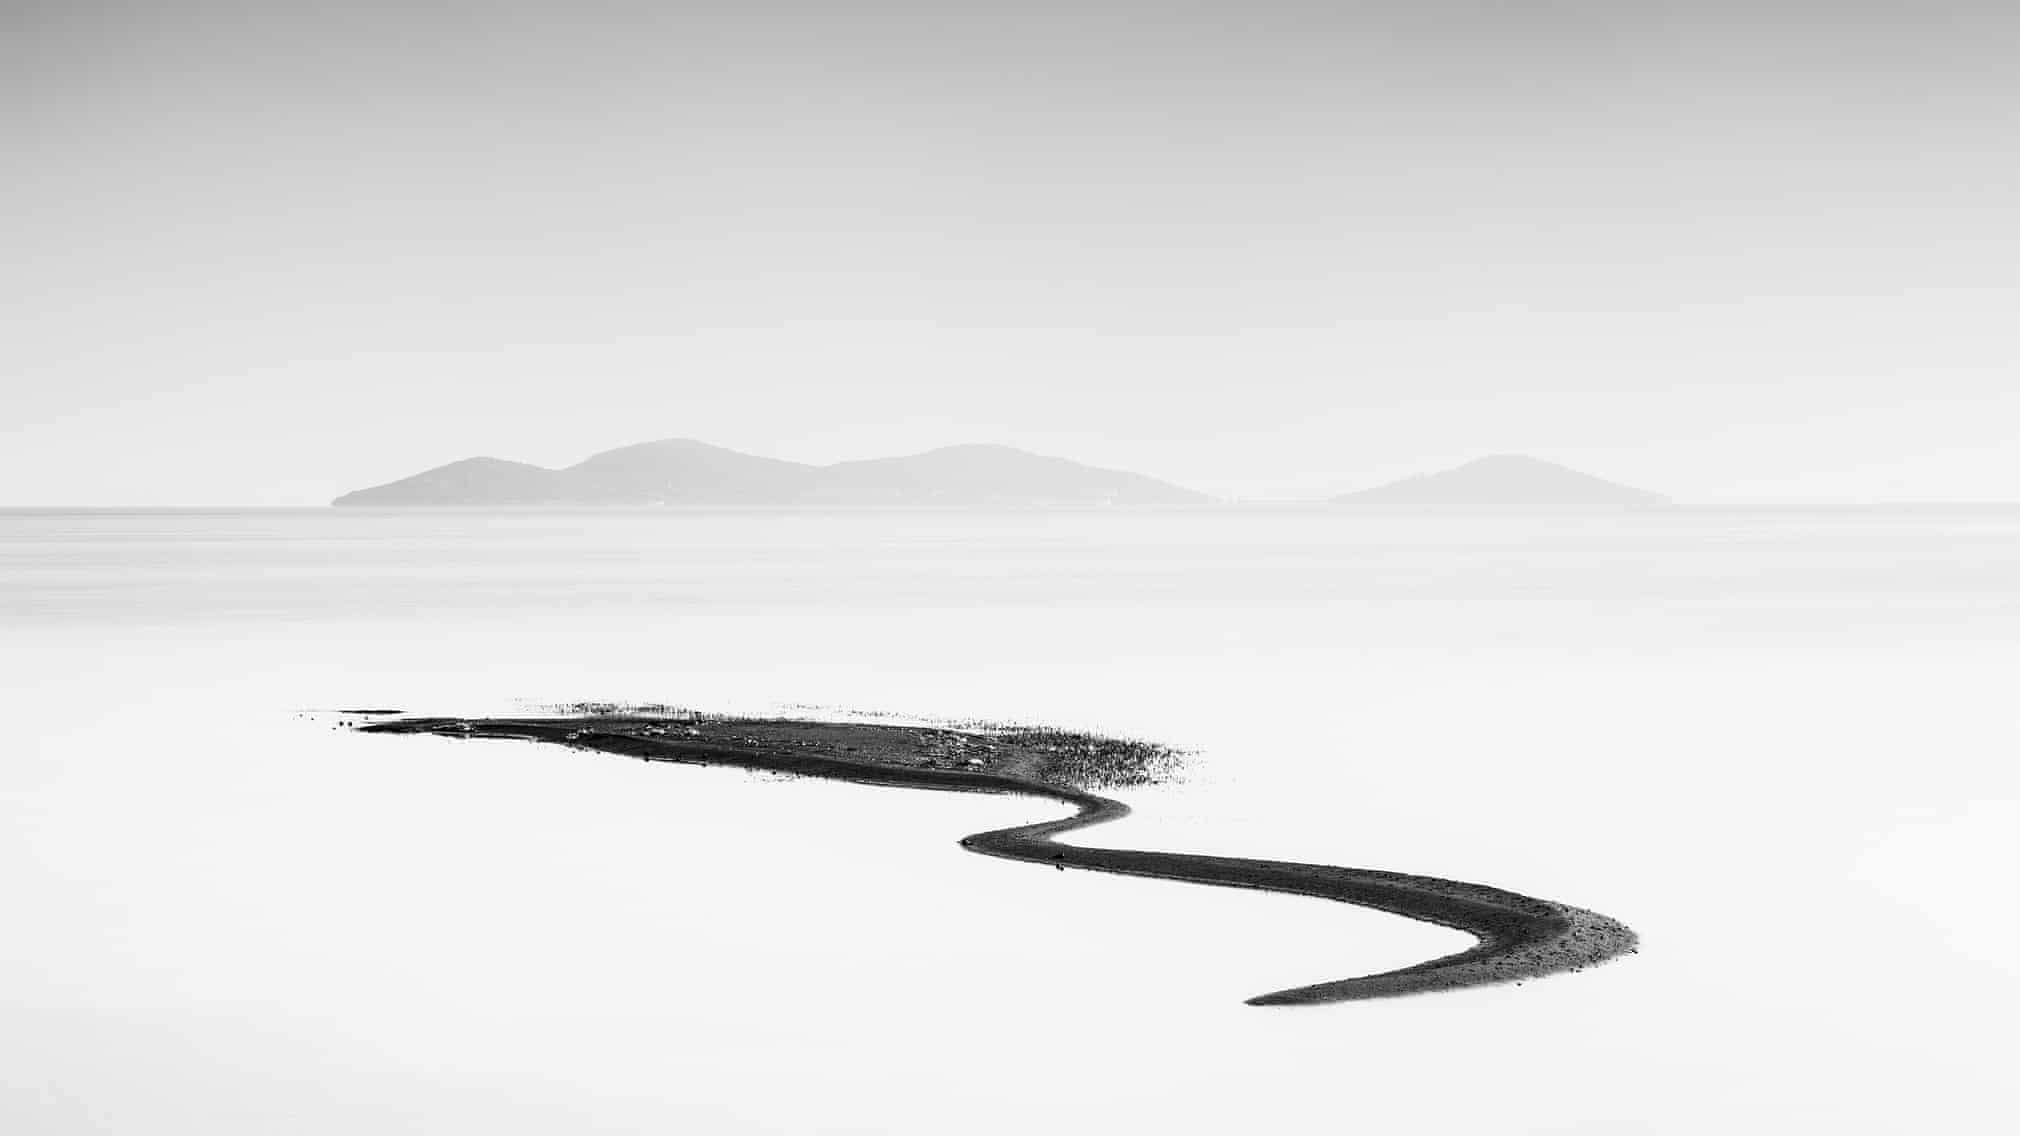 Sandy Shapes, © David Frutos Egea (ES), Winner Landscapes Category, GDT European Wildlife Photographer of the Year